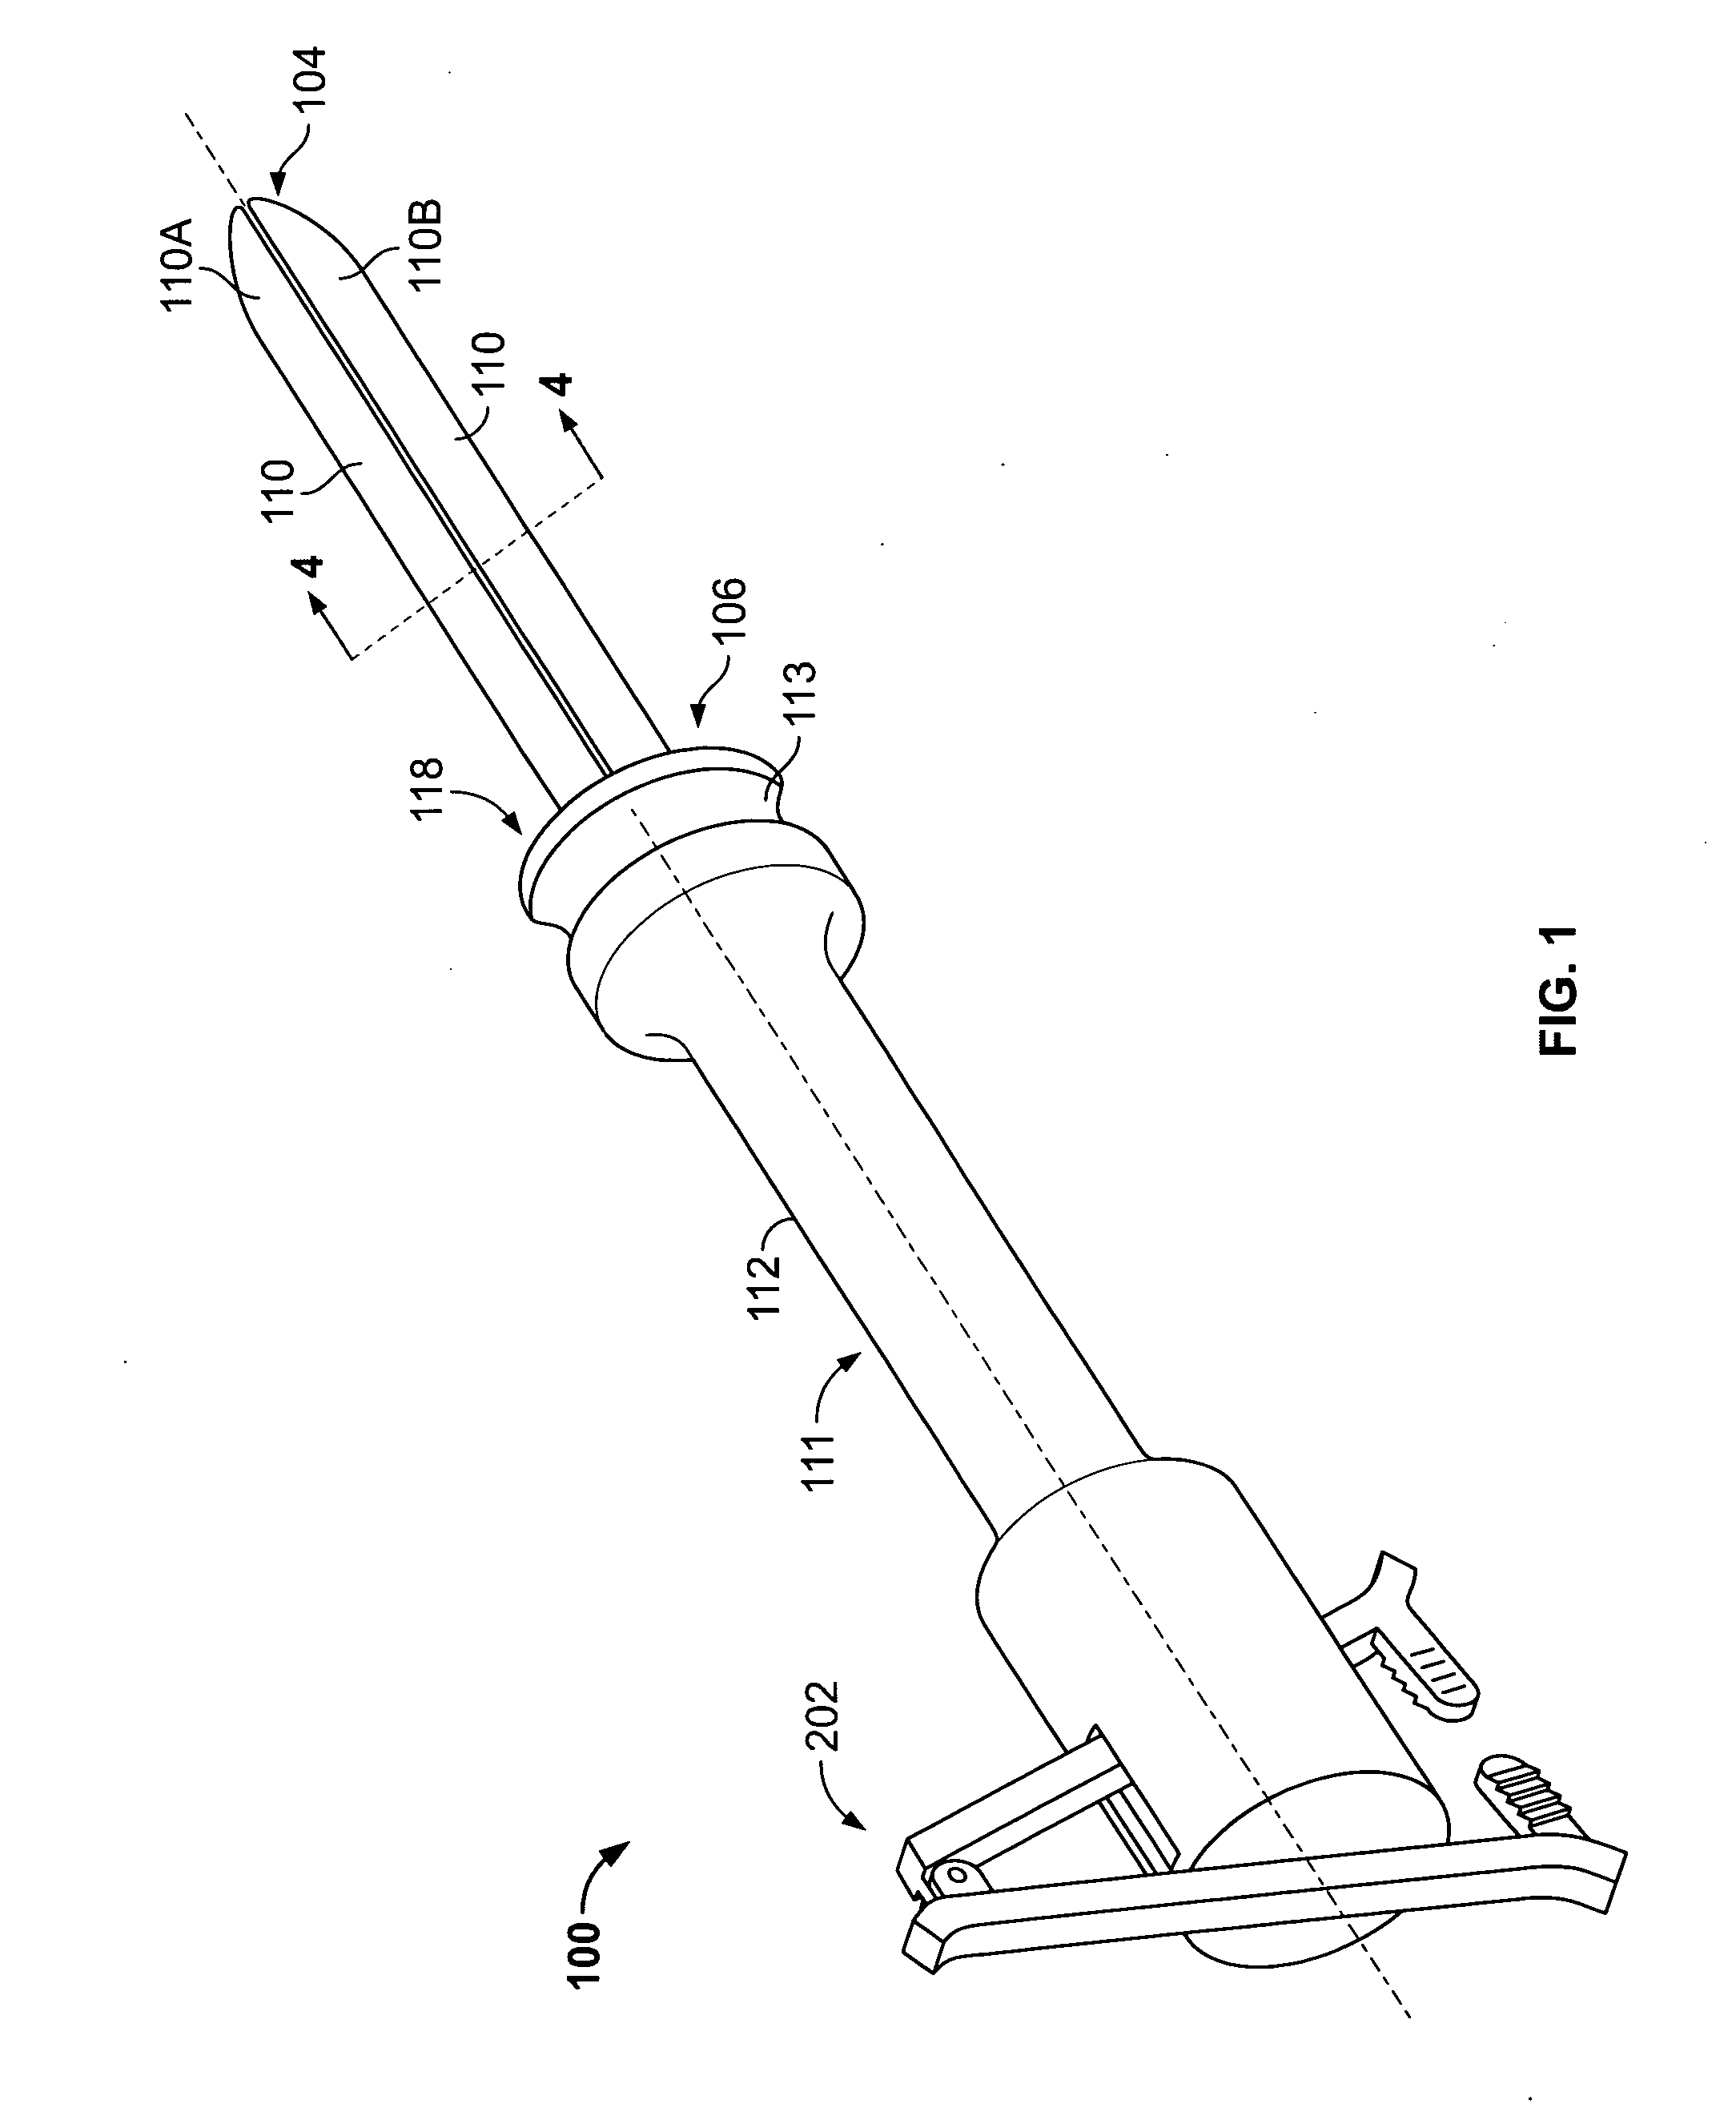 Maasal cervical dilator